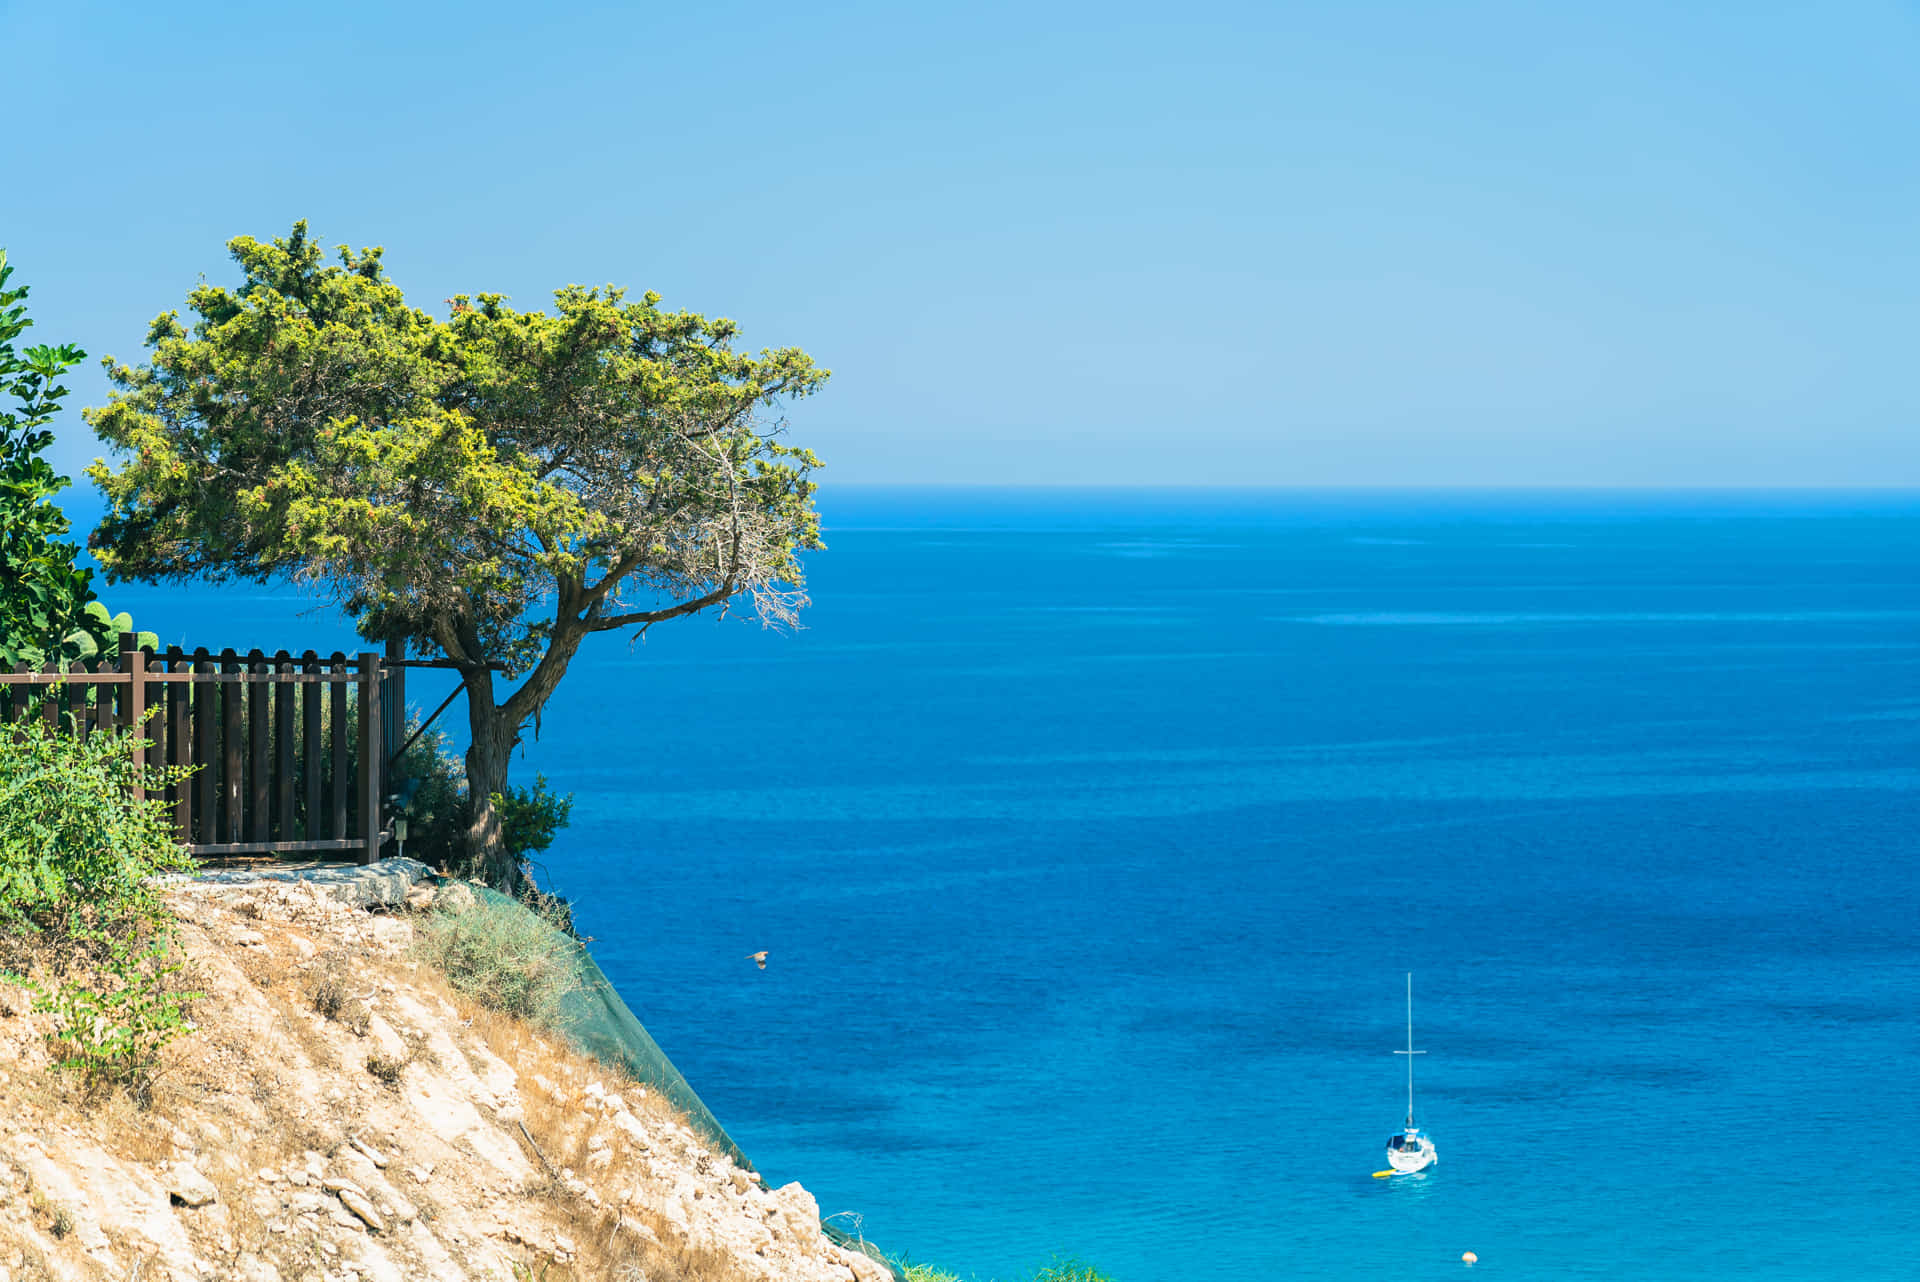 coastline Mediterranean with sea and olive tree on the rocks